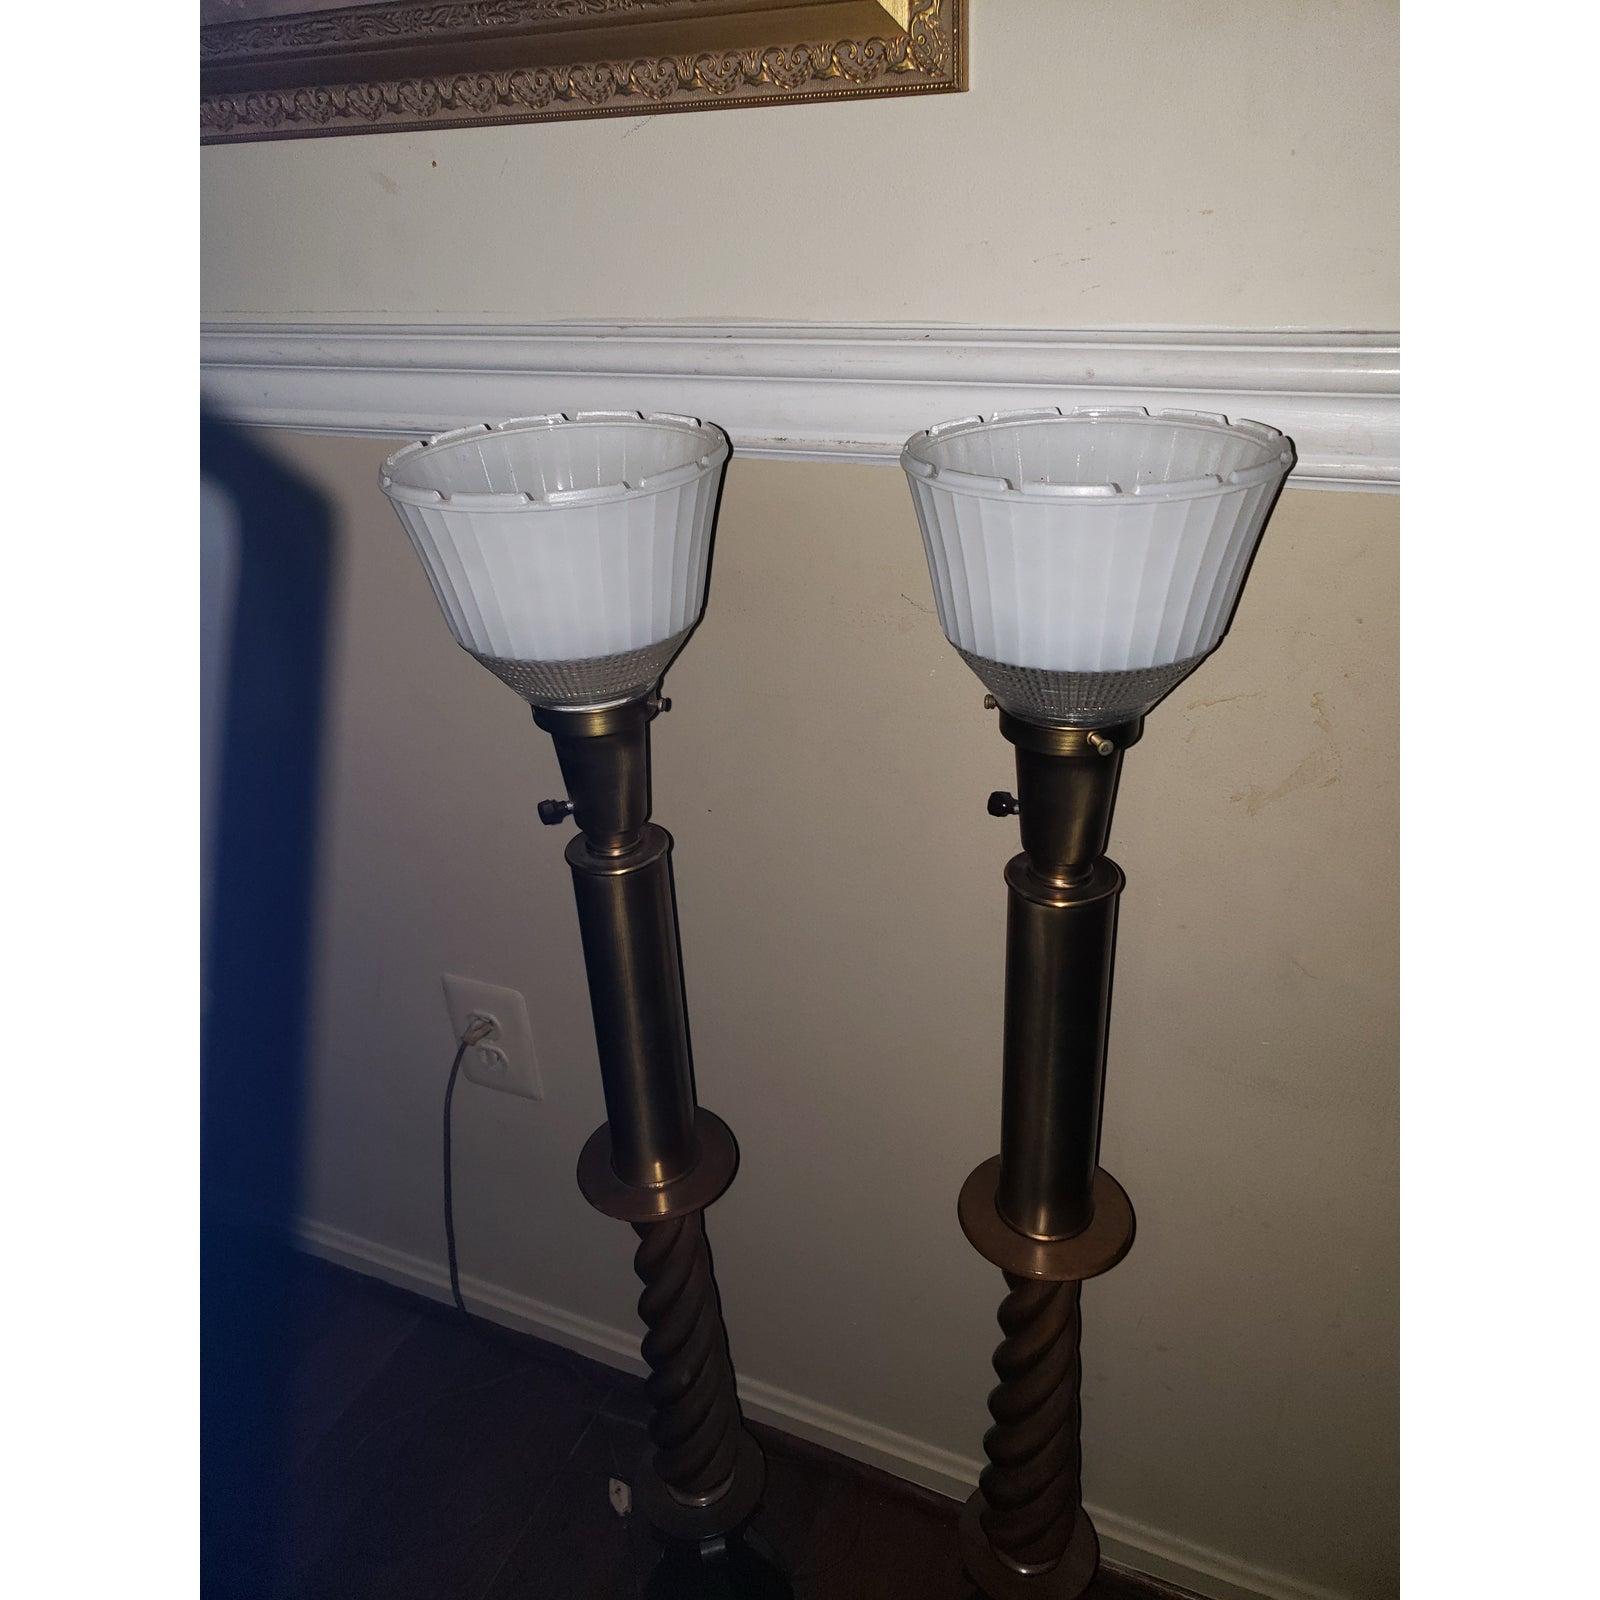 1950s milk glass lamps